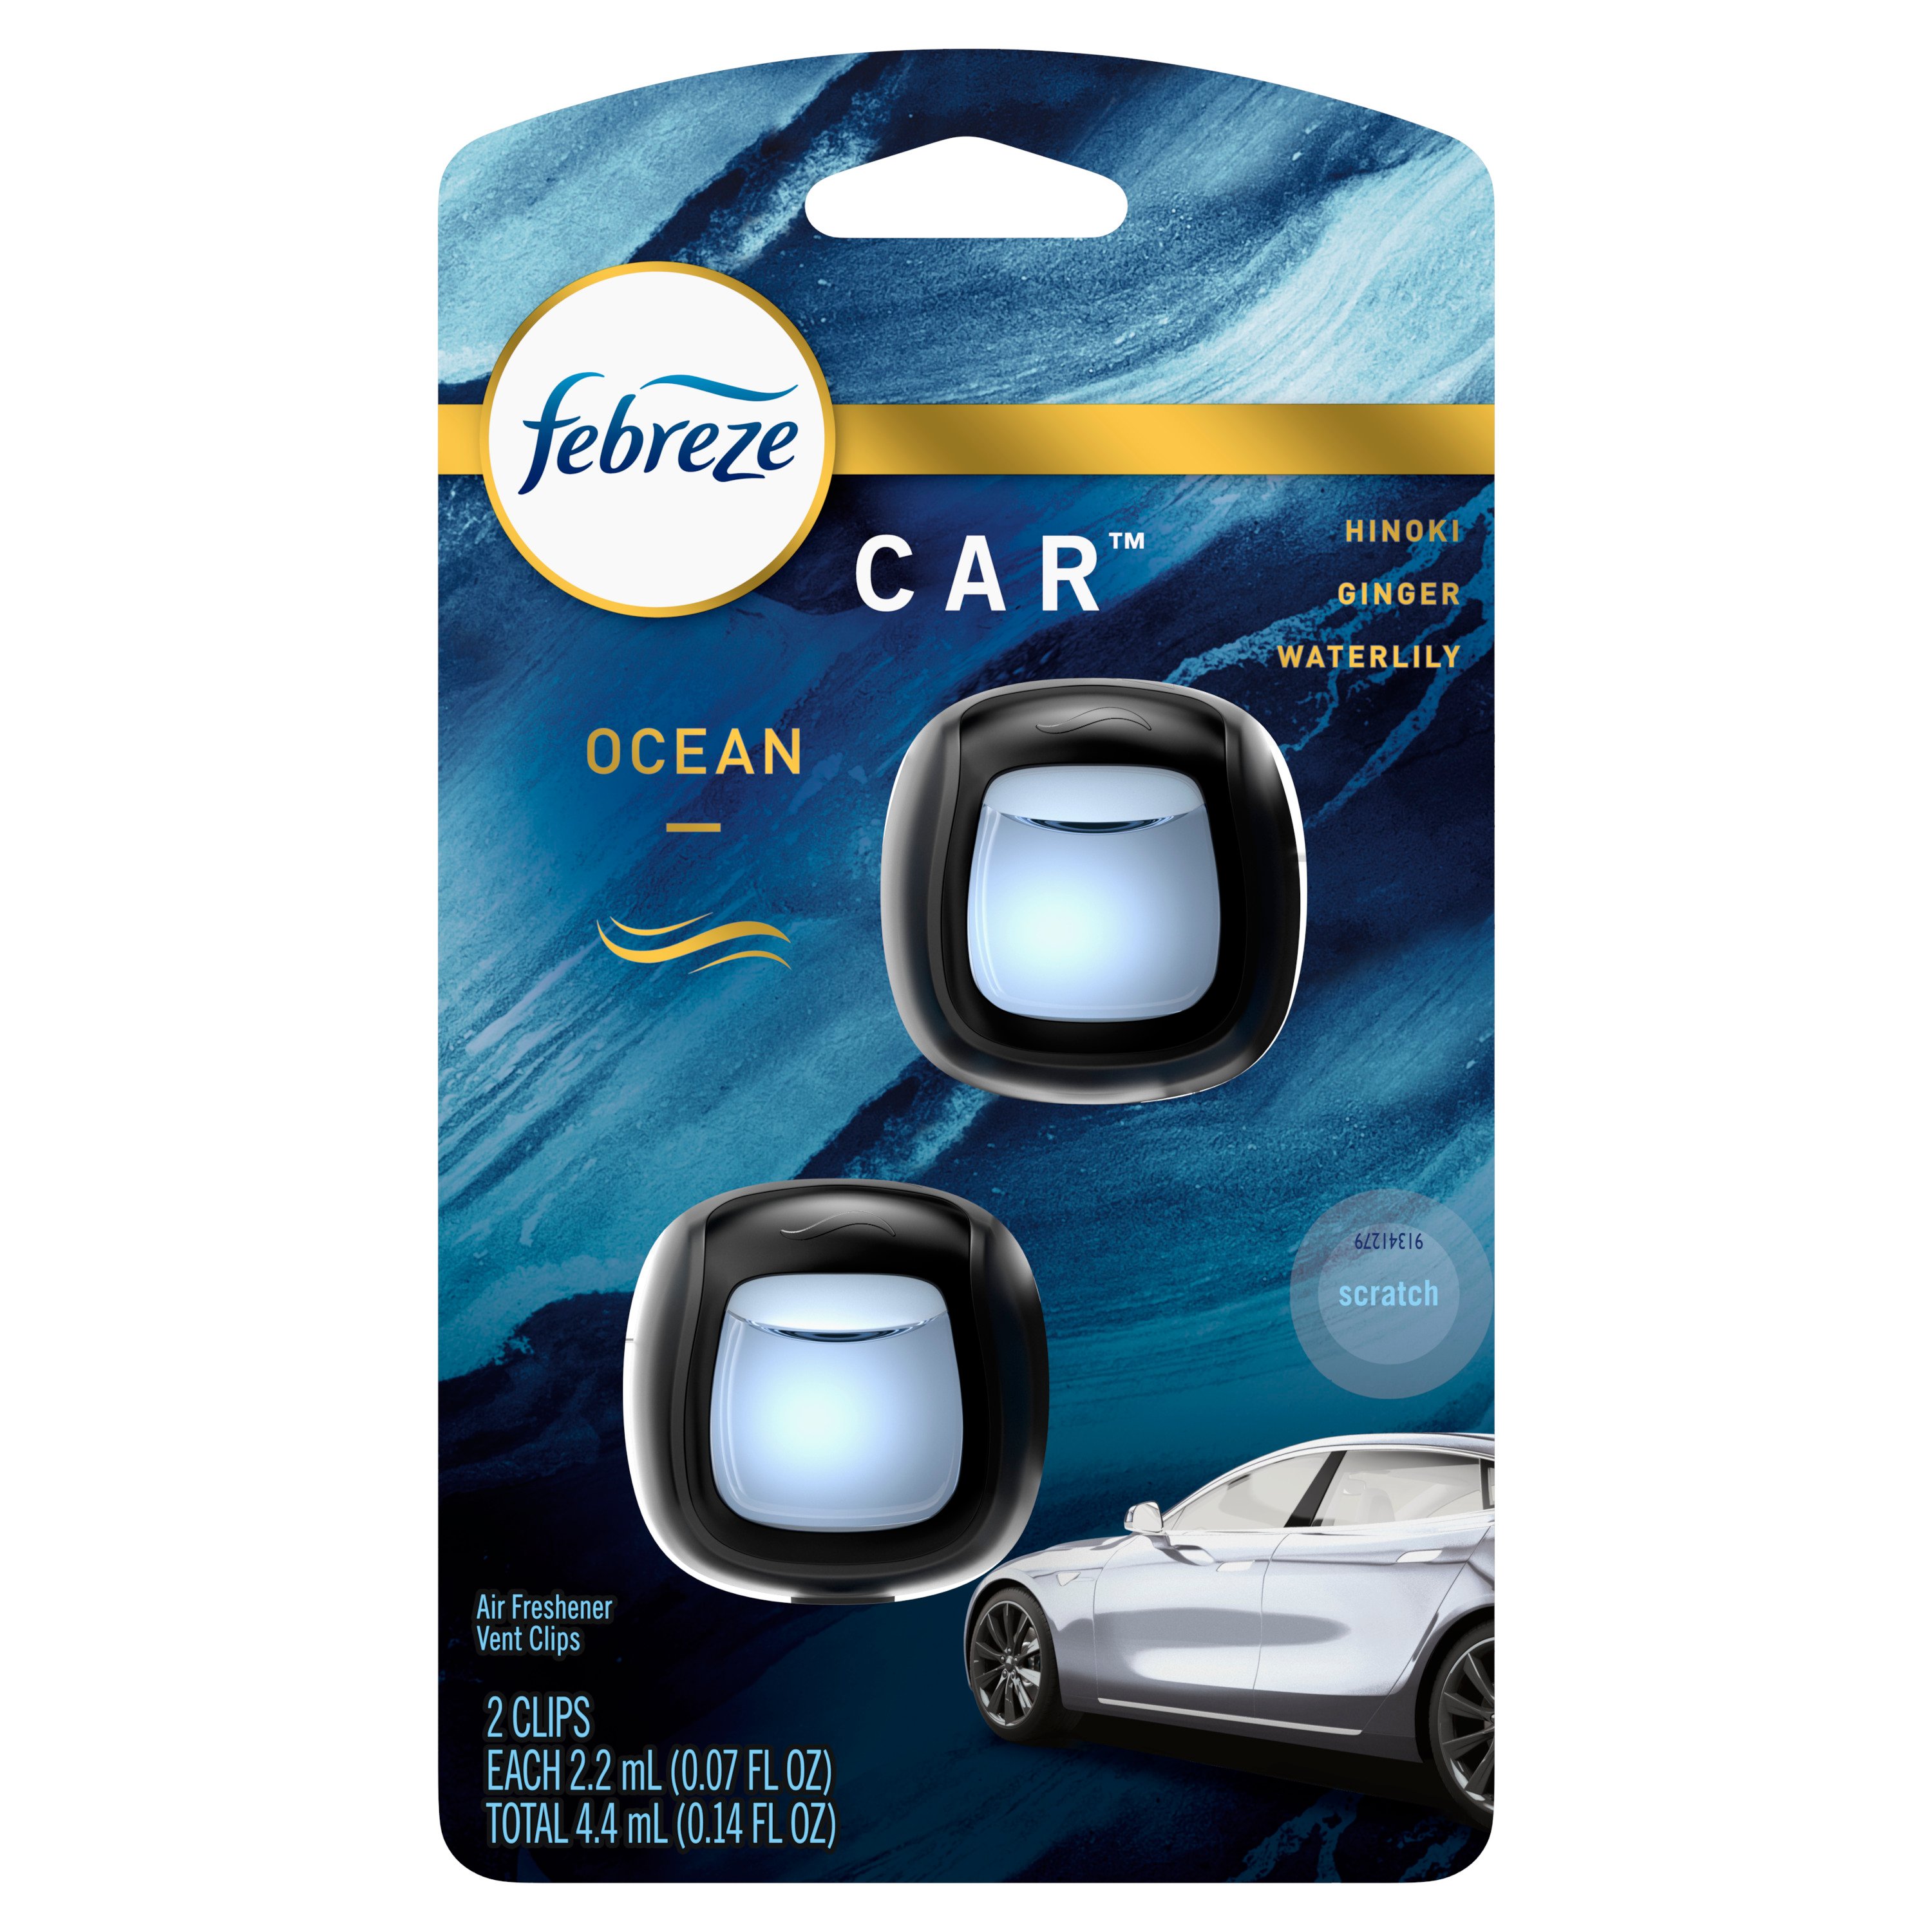 Areon Ocean Liquid Car Freshener - 5ml